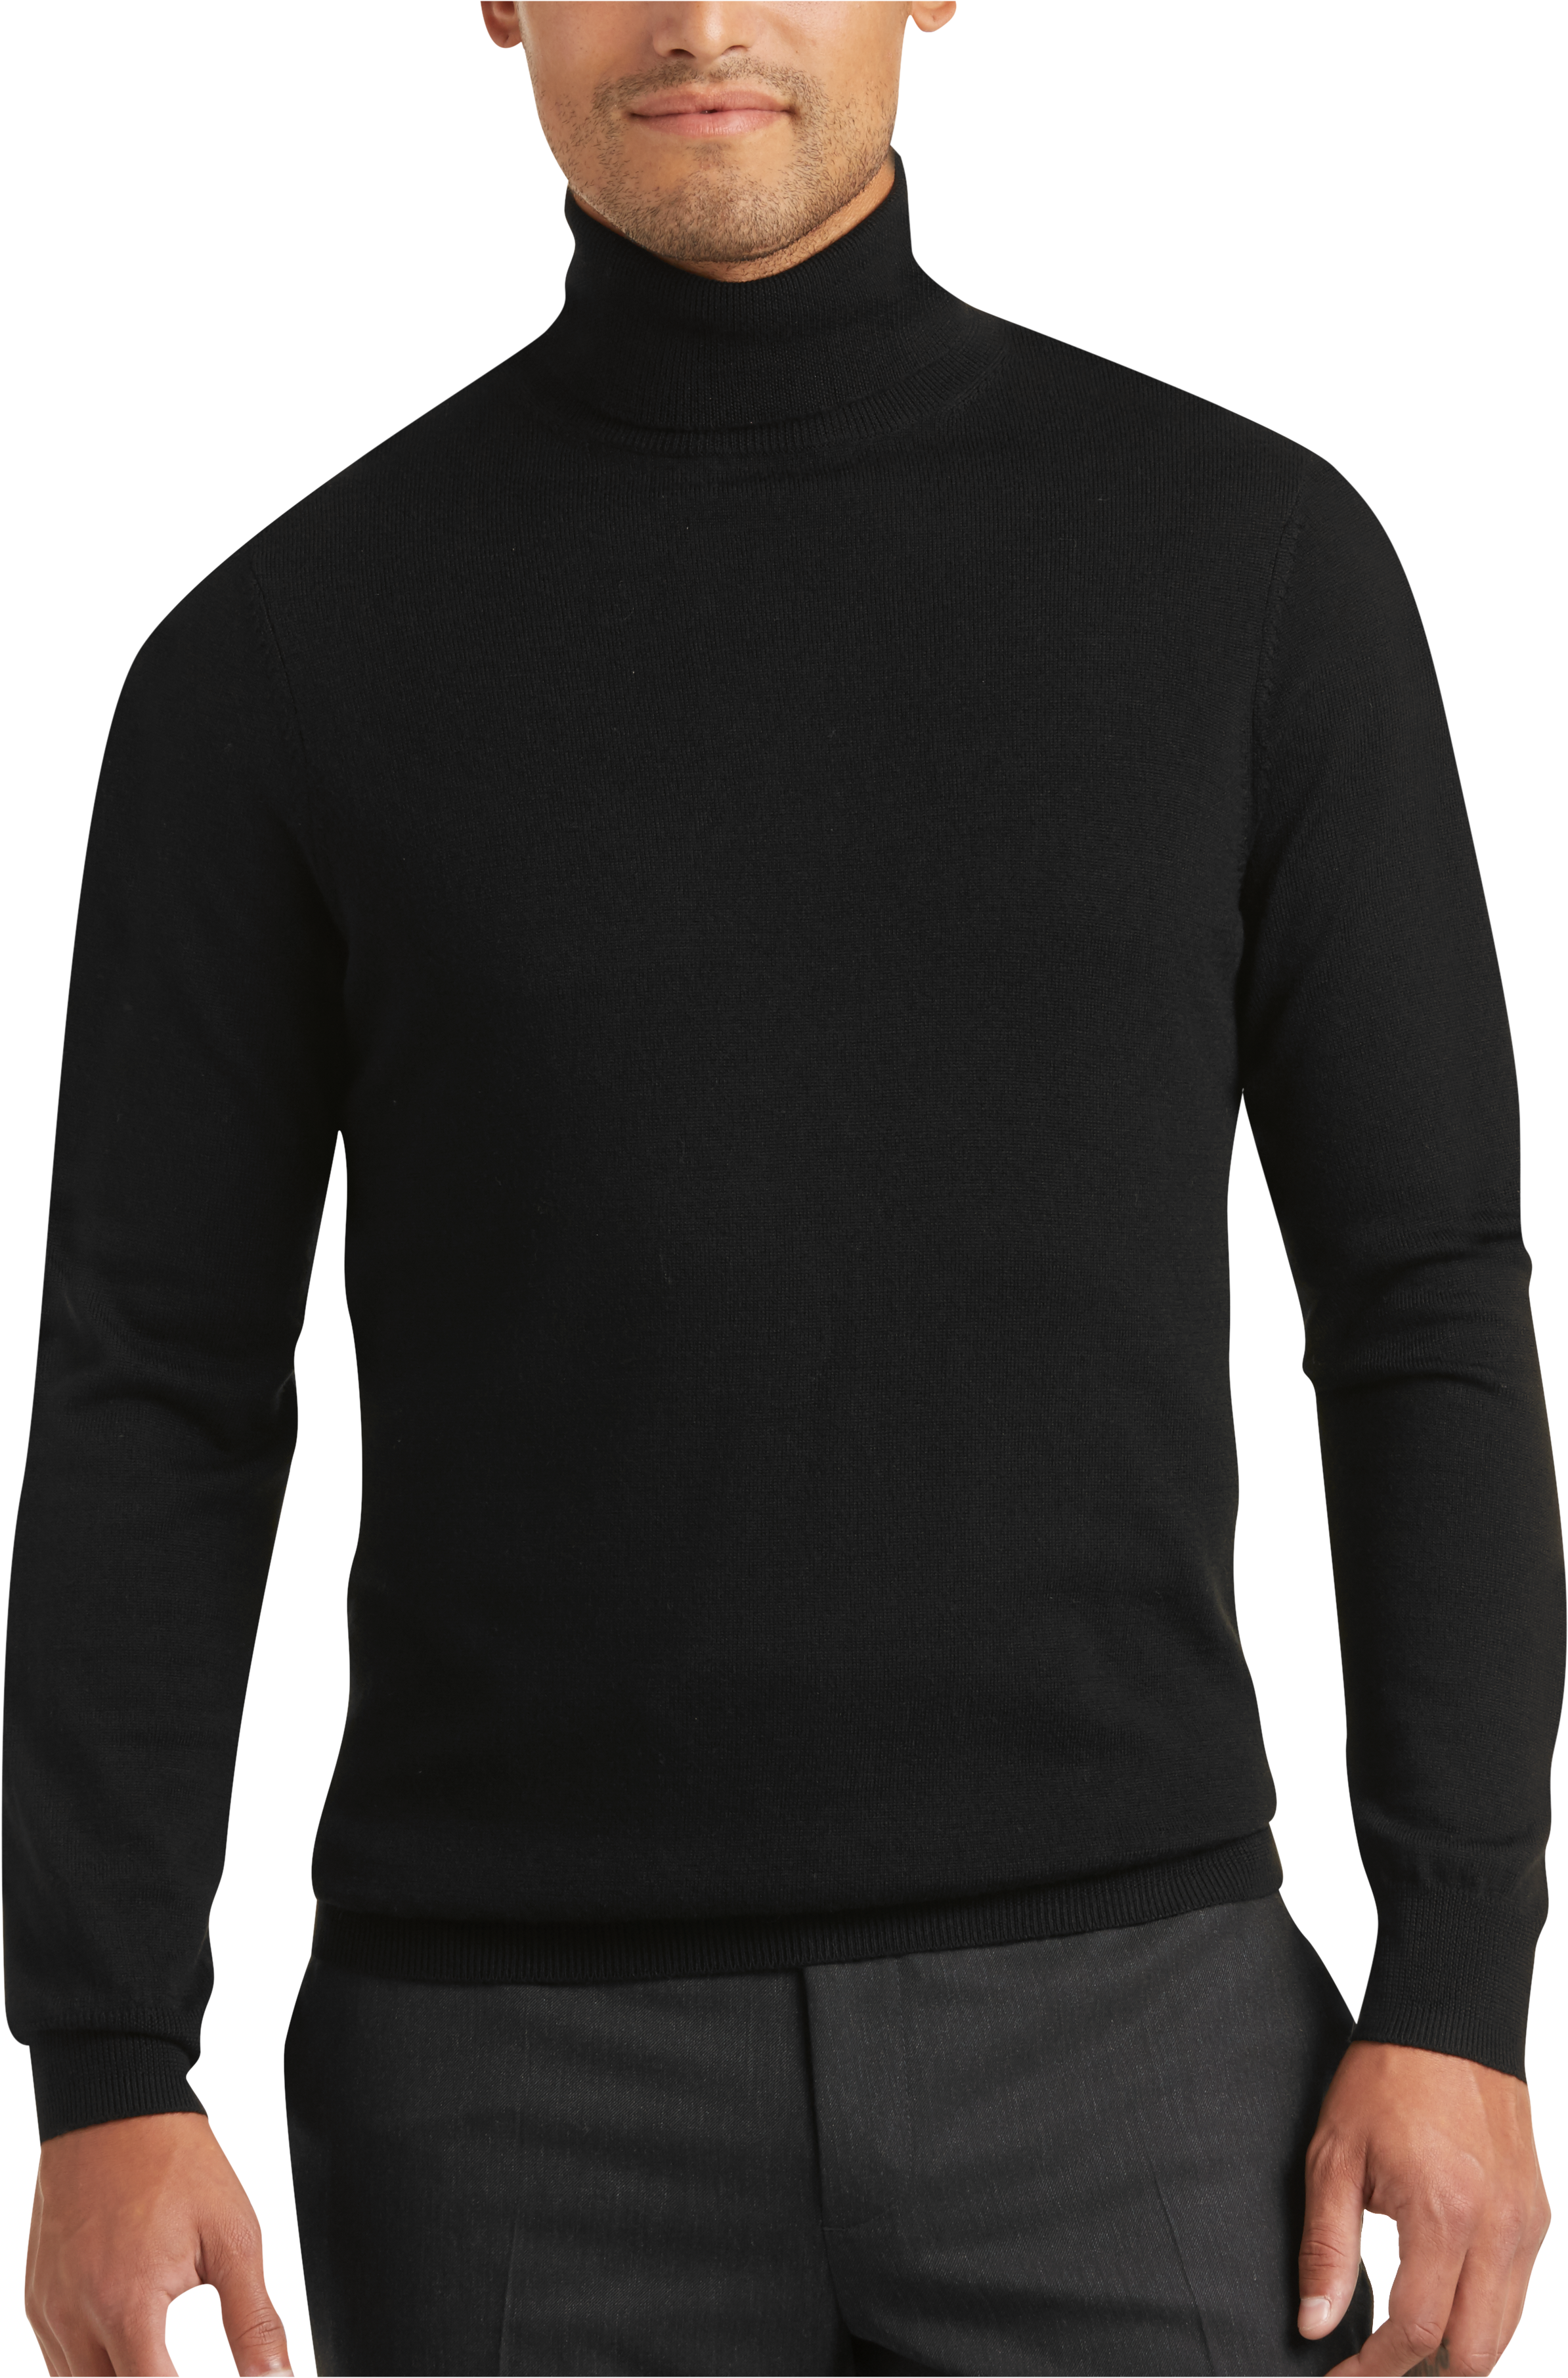 Joseph Abboud Black Modern Fit Turtleneck Sweater - Men's Sale | Men's ...